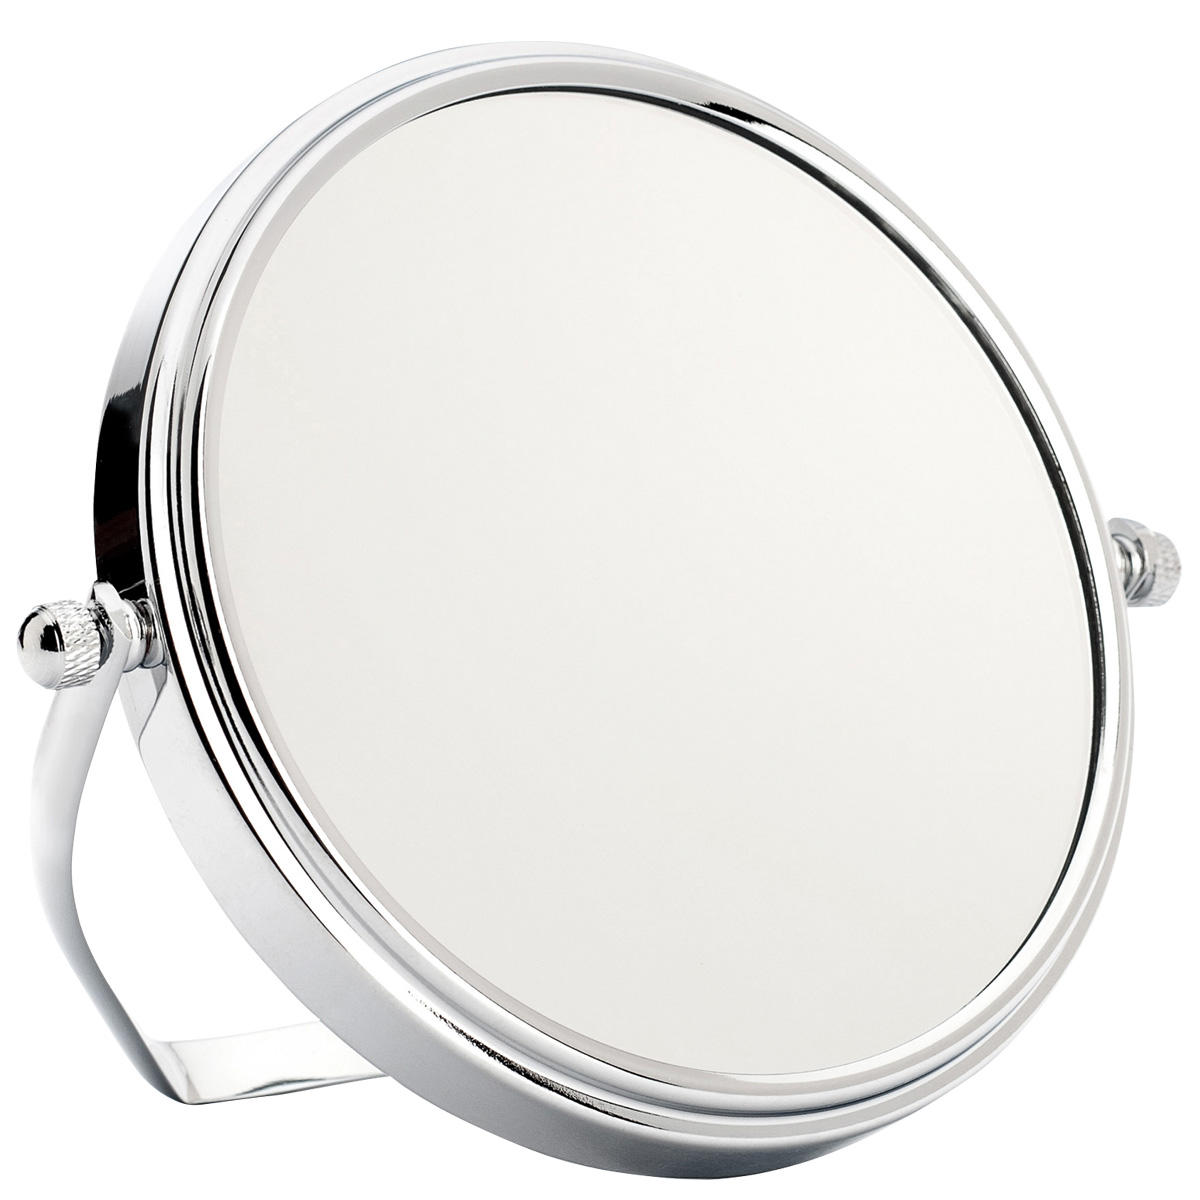 MÜHLE Mirror with holder  - 1